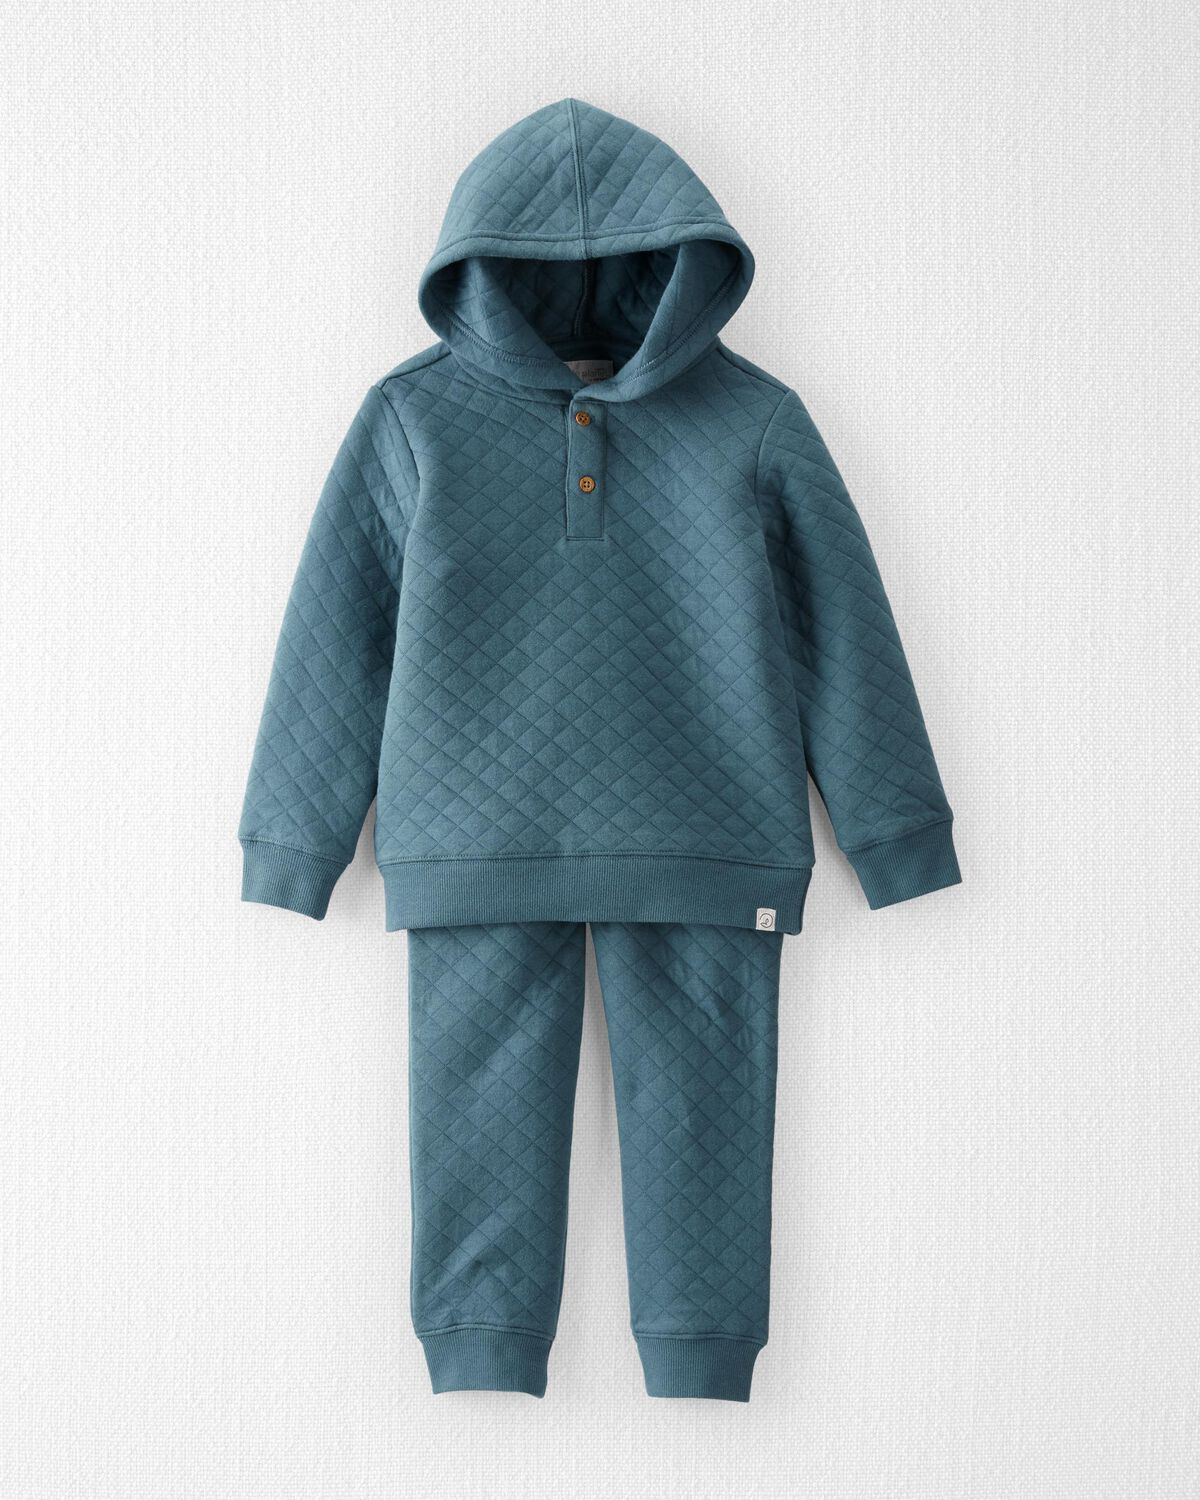 Brooklyn Blue Toddler 2-Piece Quilted Hoodie Set Made With Organic Cotton | oshkosh.com | OshKosh B'gosh